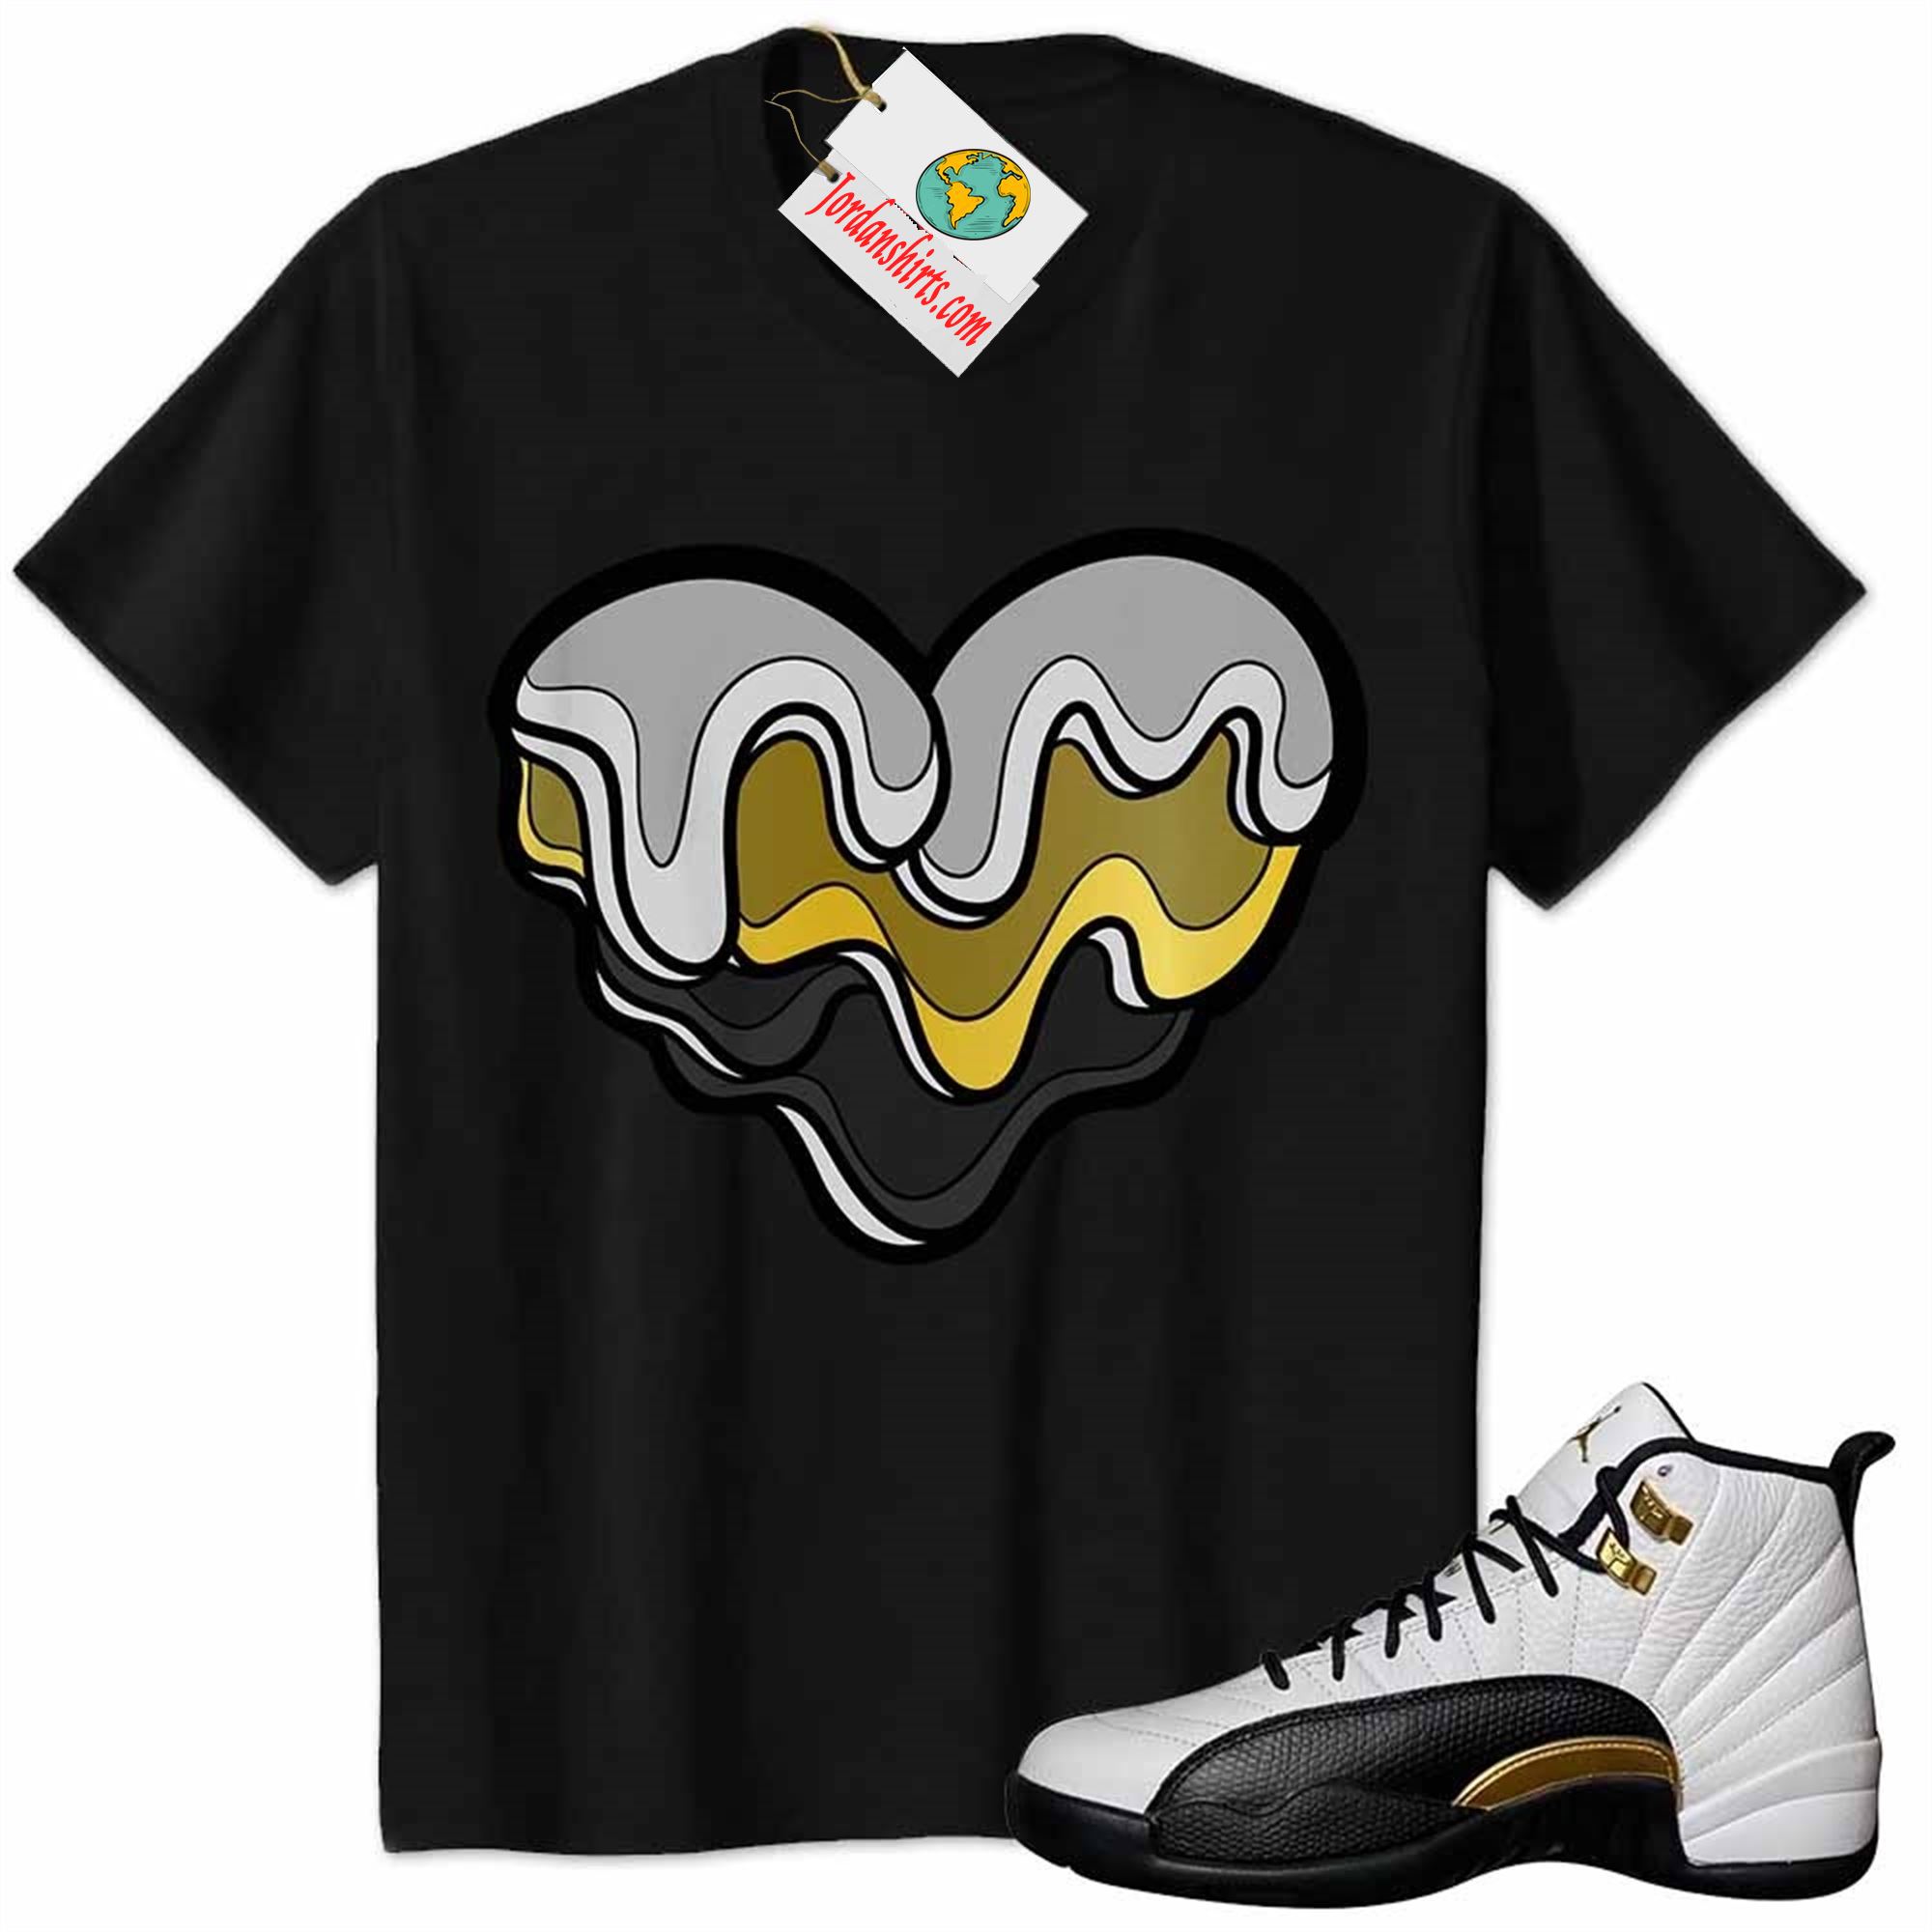 Jordan 12 Shirt, Melt Dripping Heart Black Air Jordan 12 Royalty 12s Full Size Up To 5xl